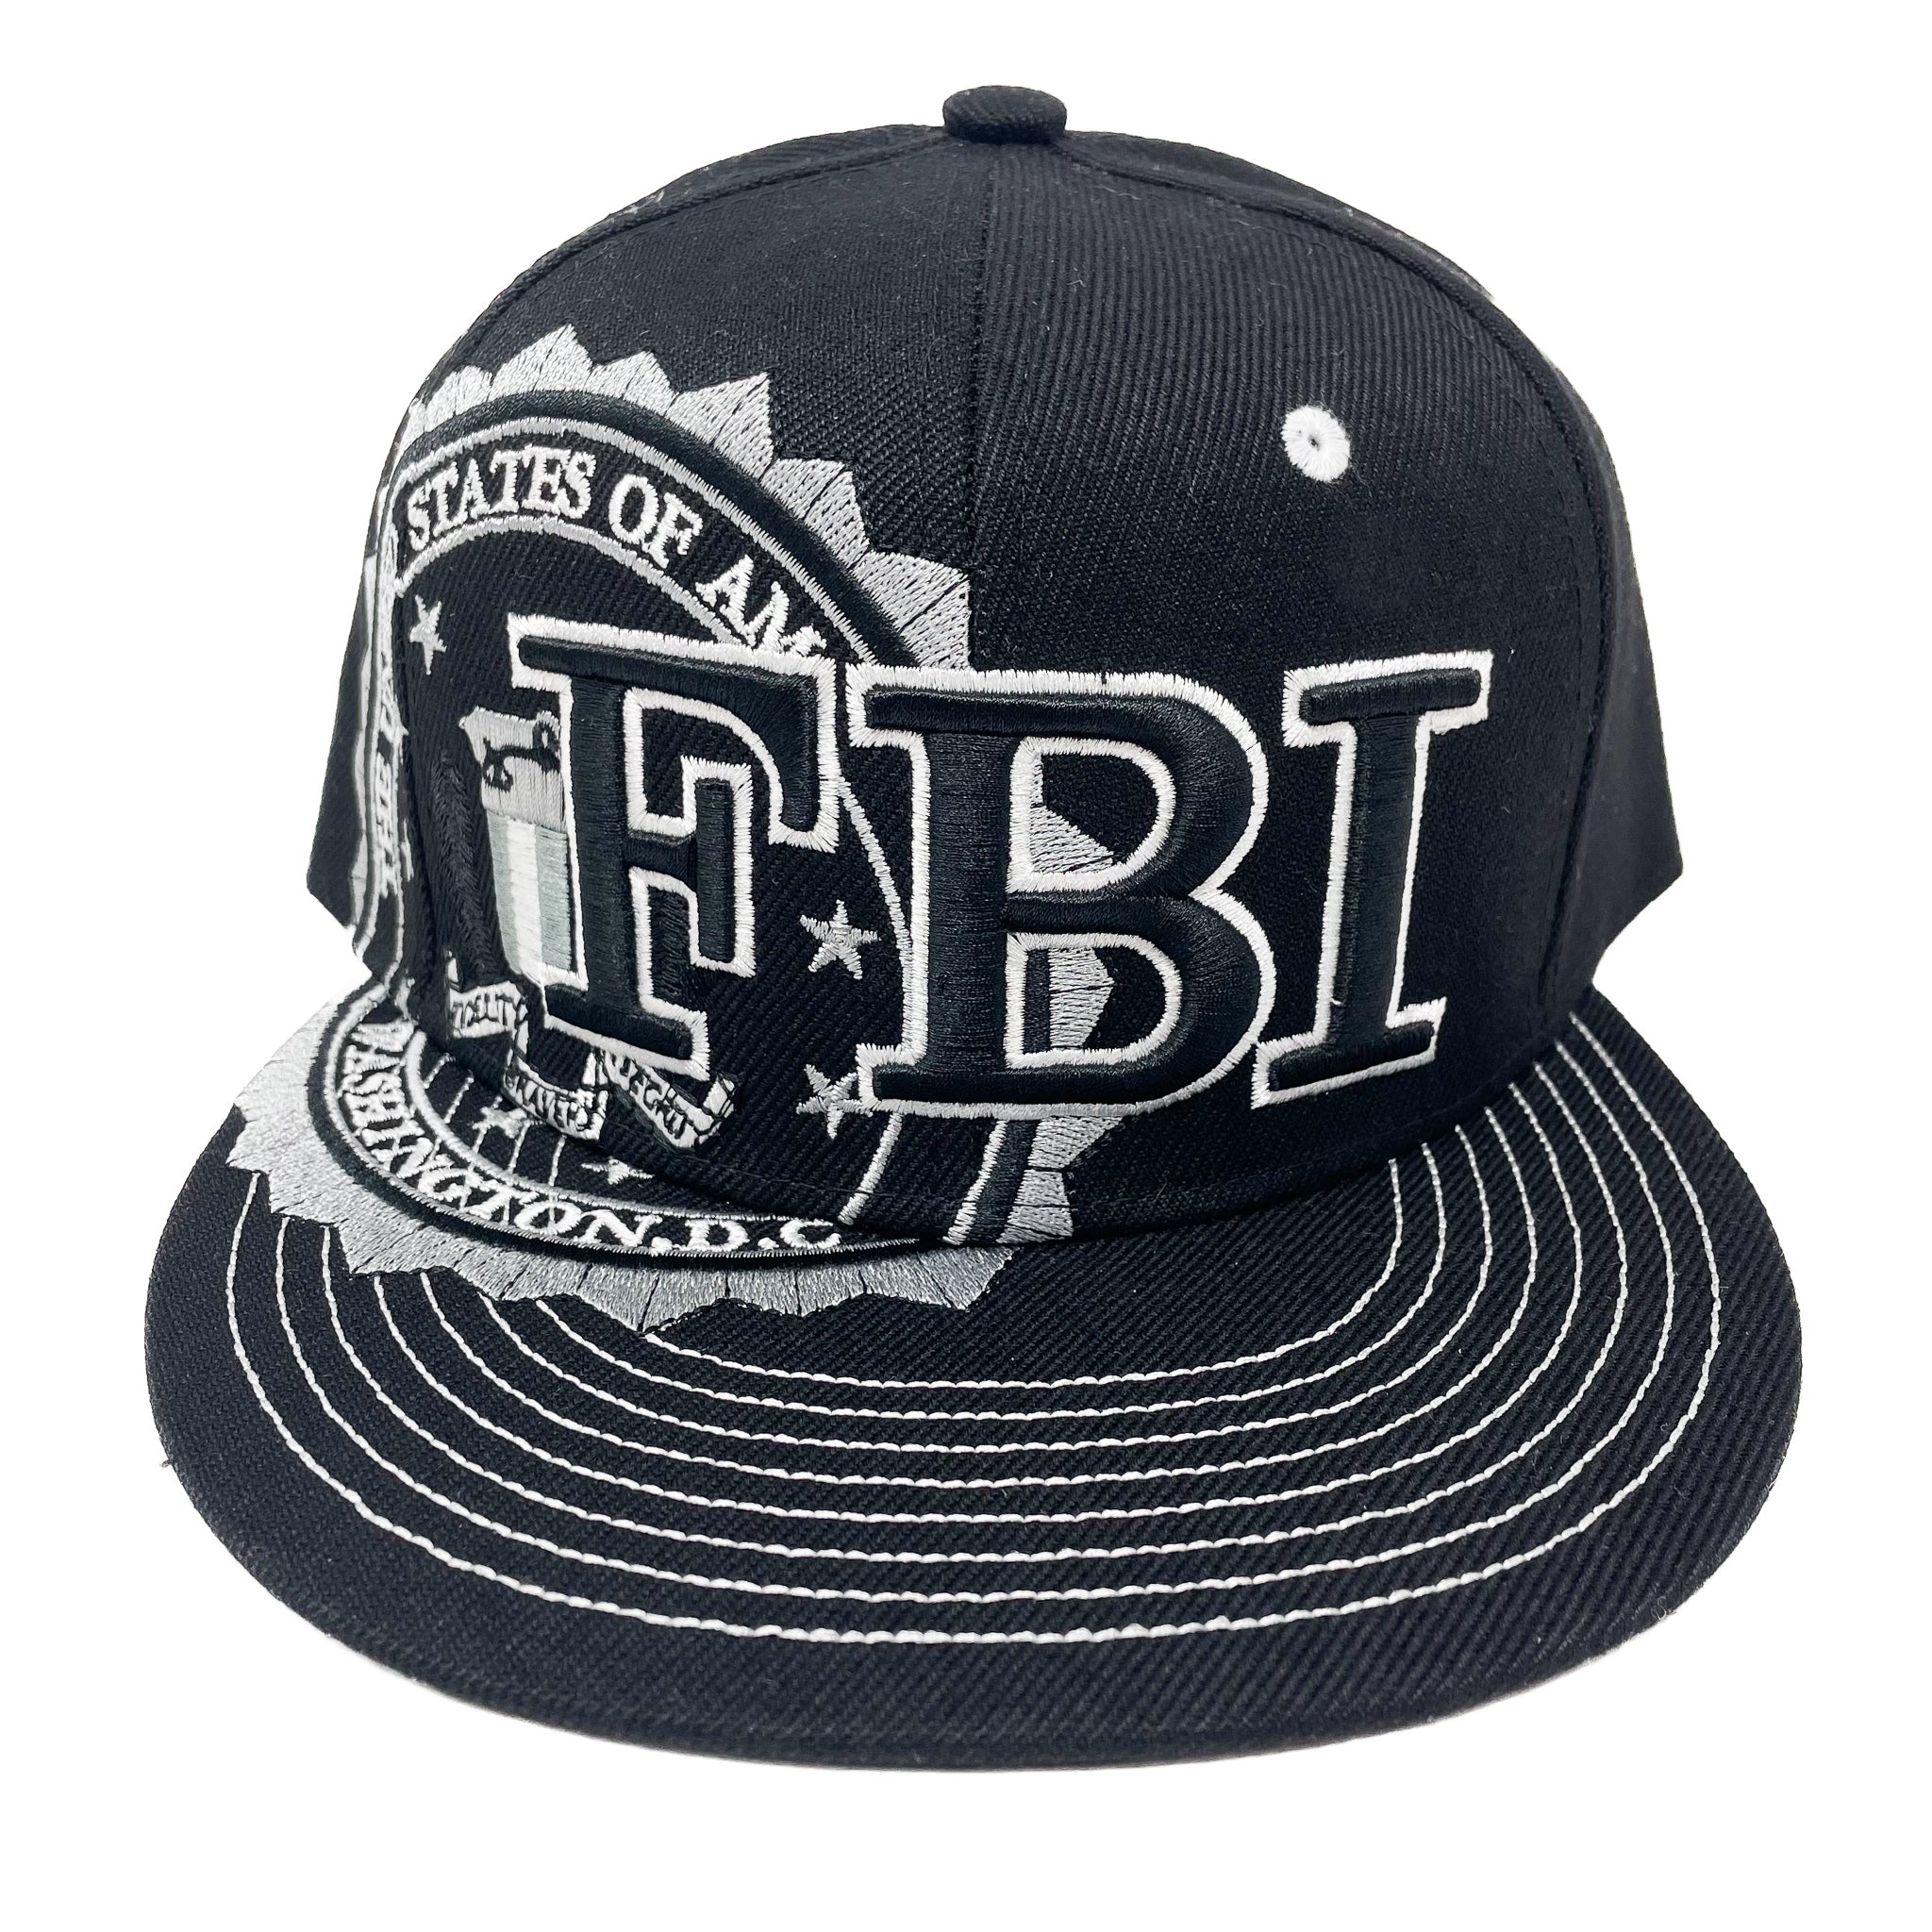 Federal Bureau of Investigation 'FBI' Hat (2 Styles)